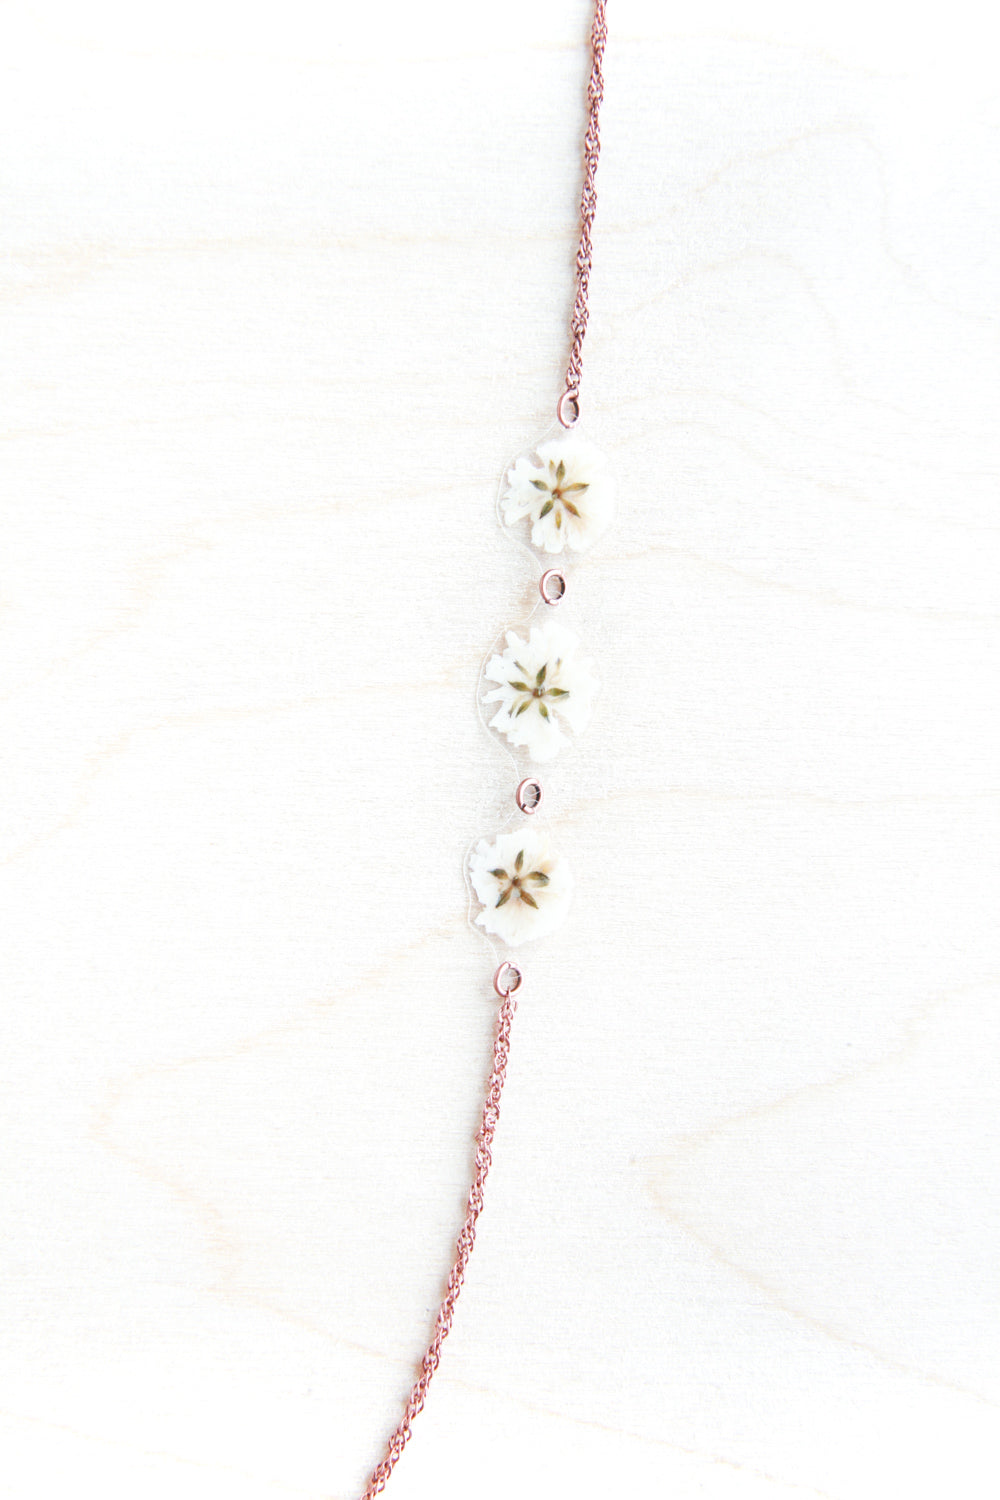 White Baby’s Breath Flower Asymmetrical Necklace